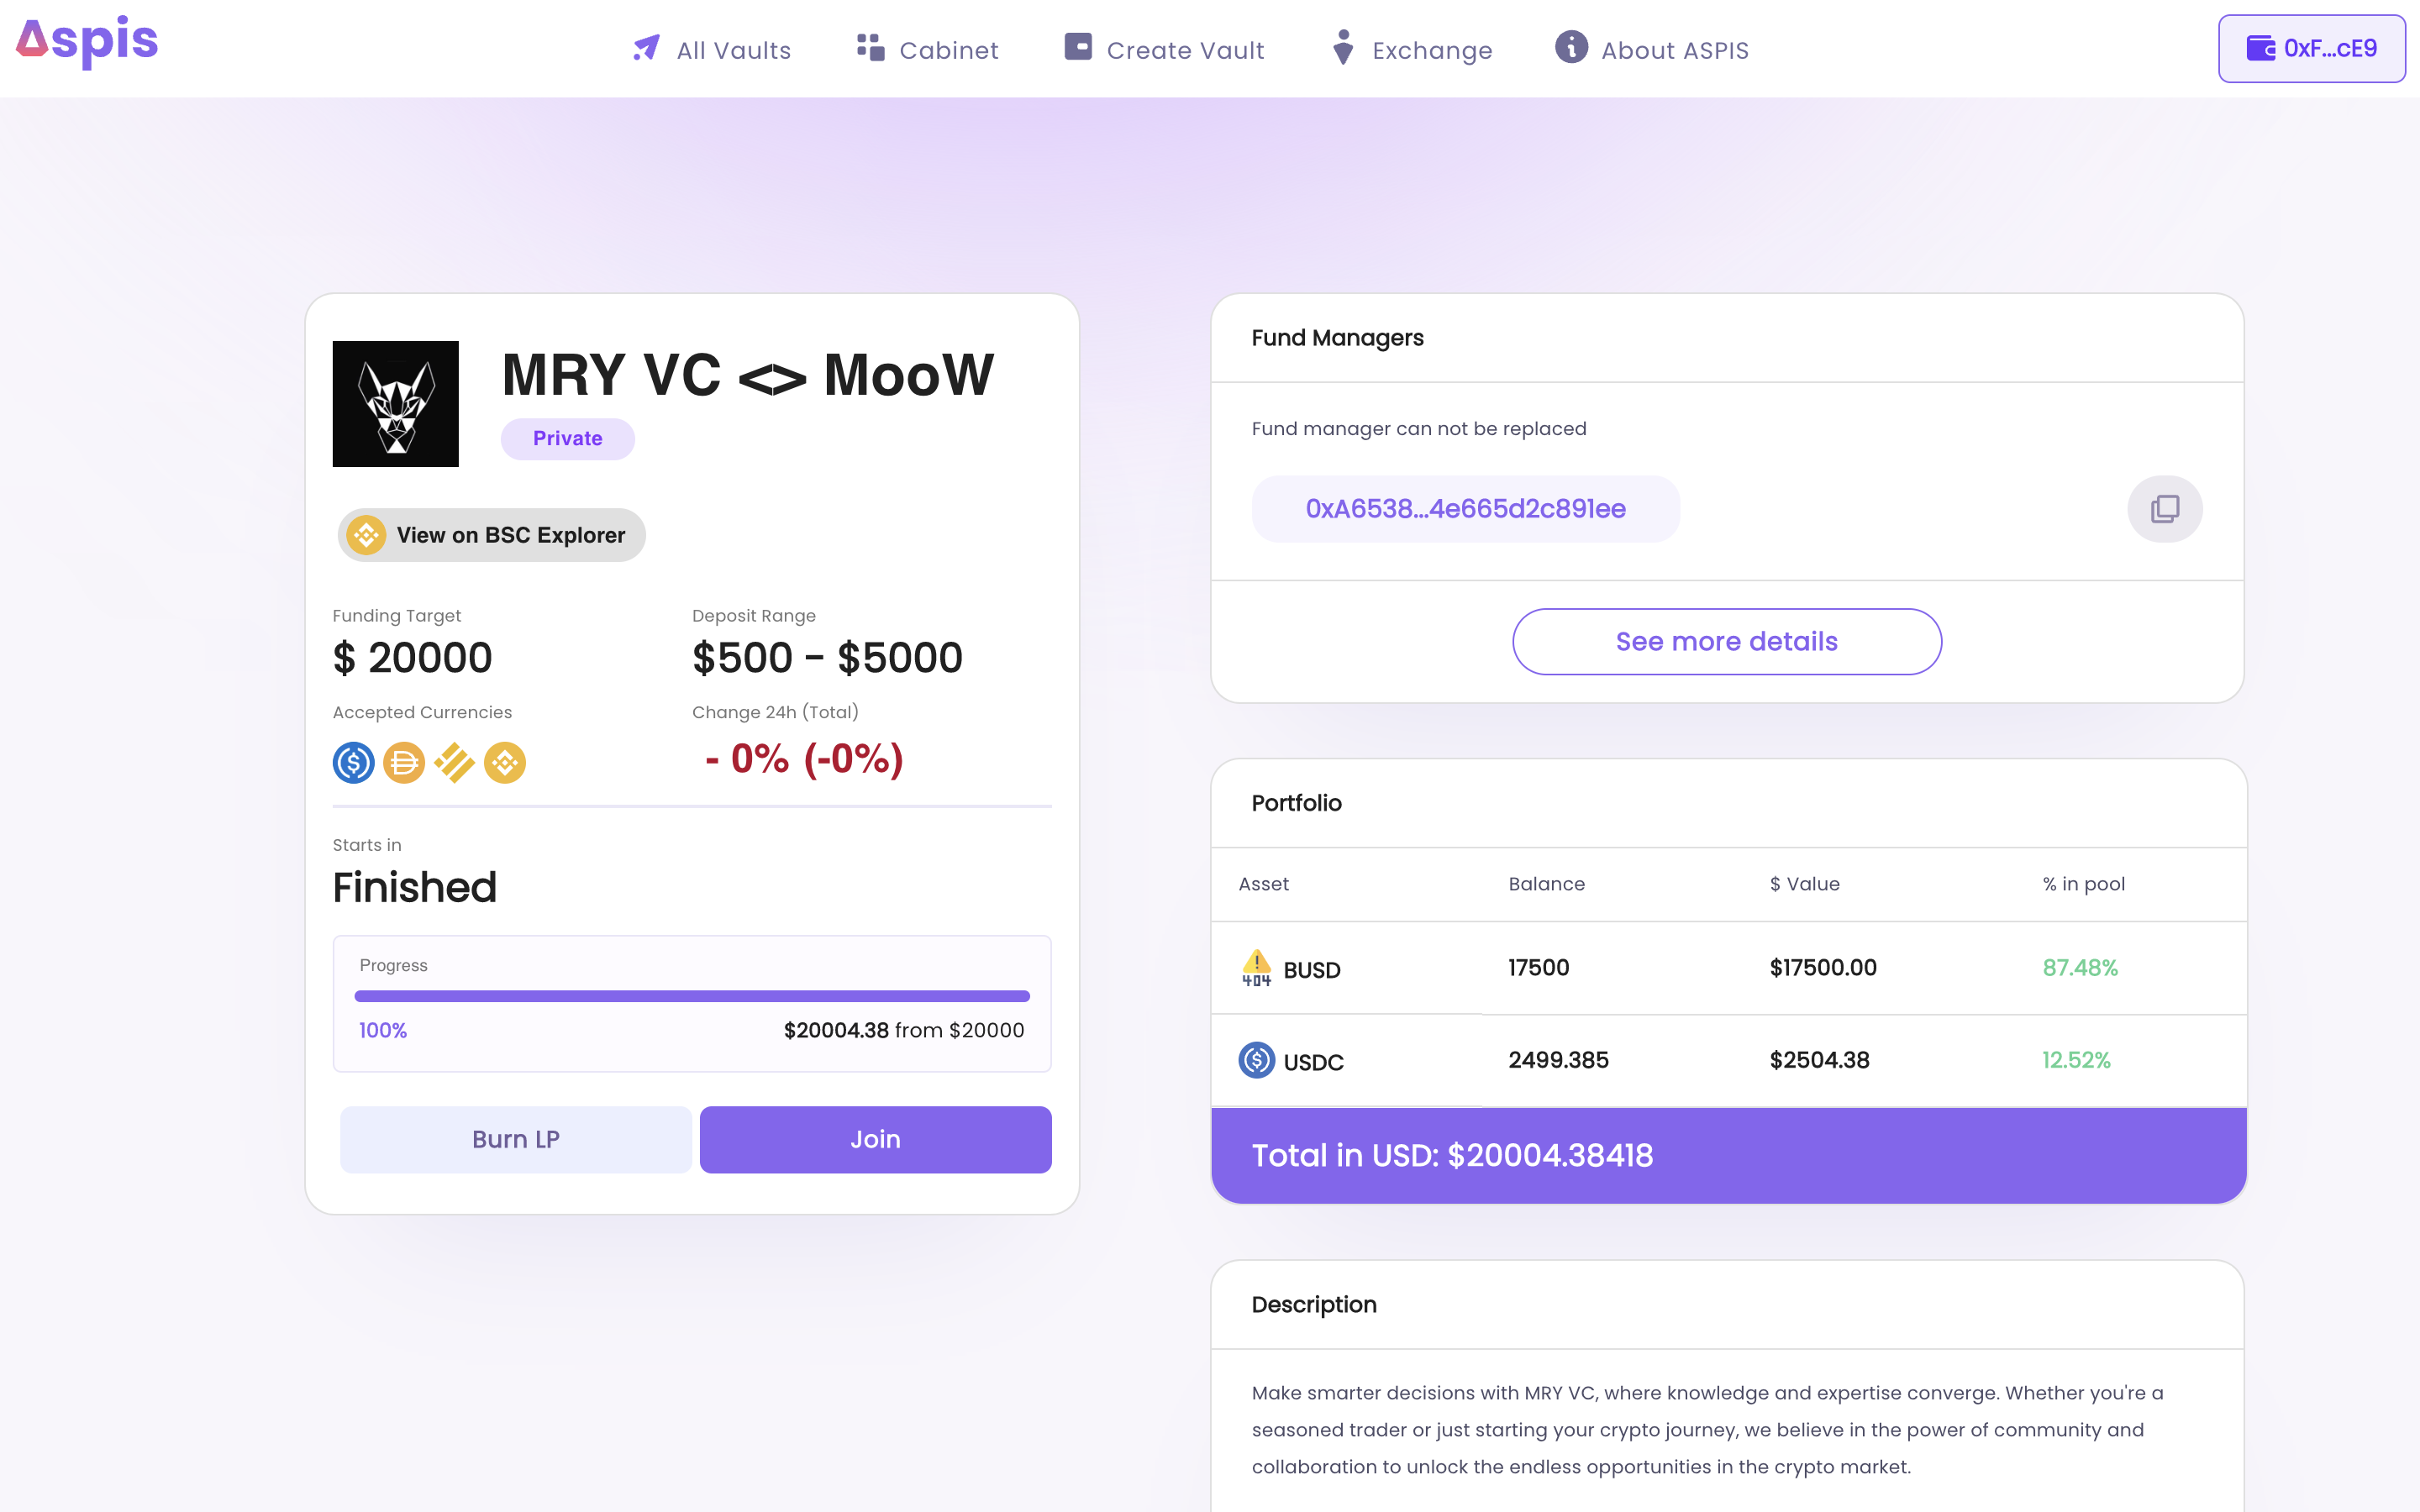 MRY VC <> MooW Vault on Aspis Interface